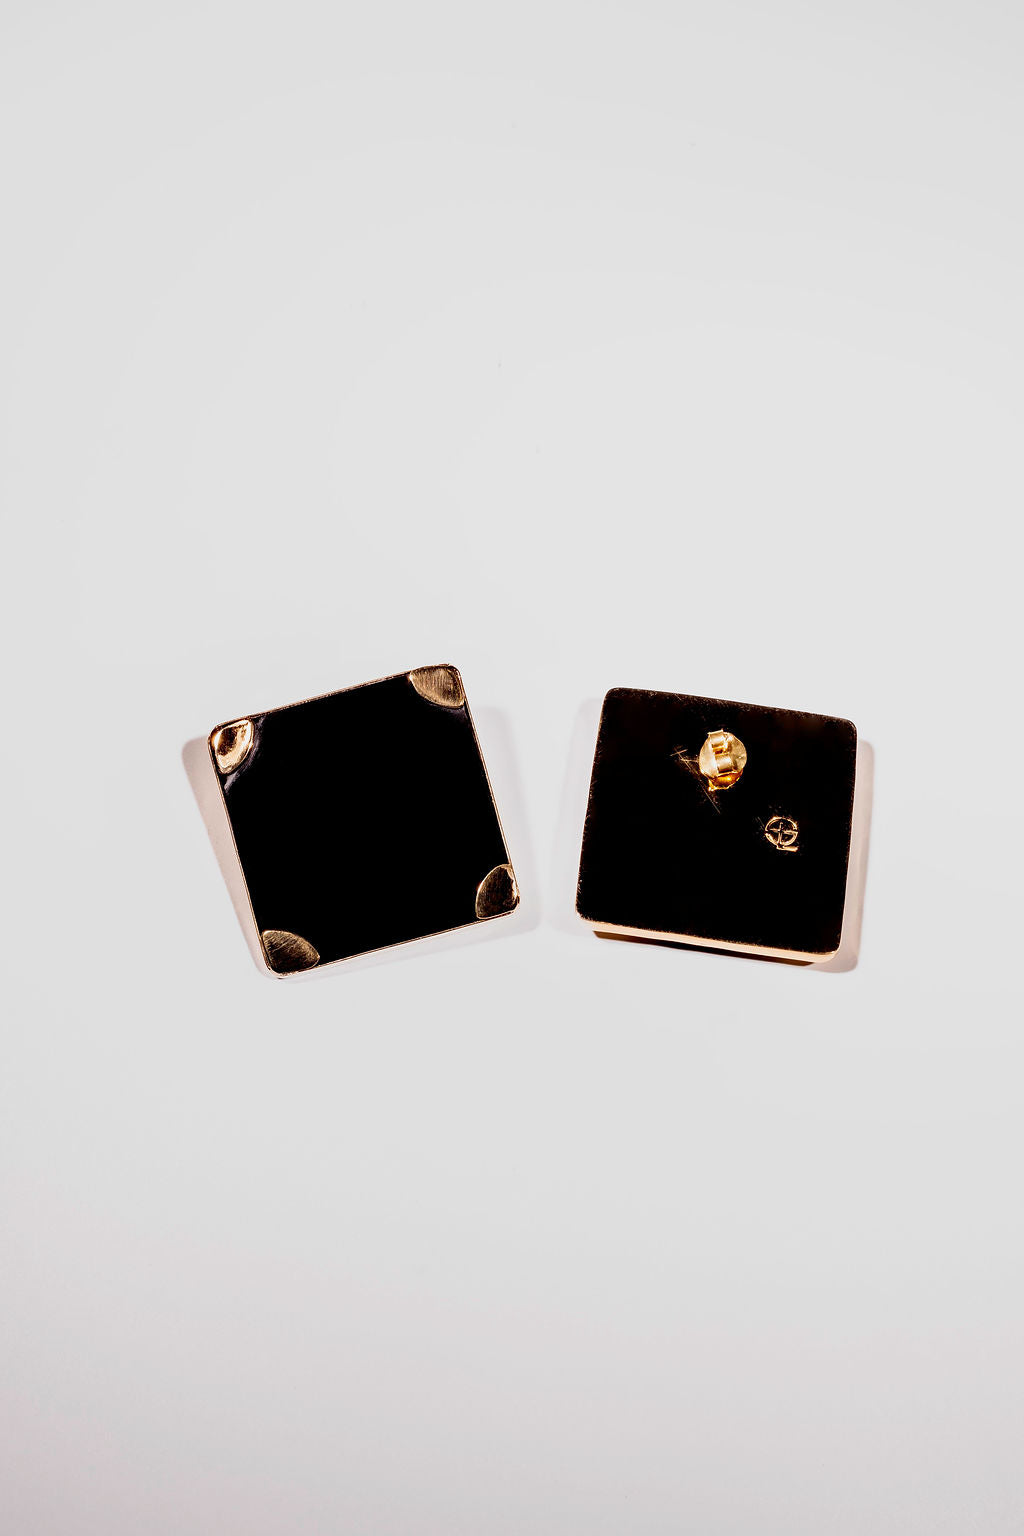 Square Black Art Deco Earrings - Shantall Lacayo